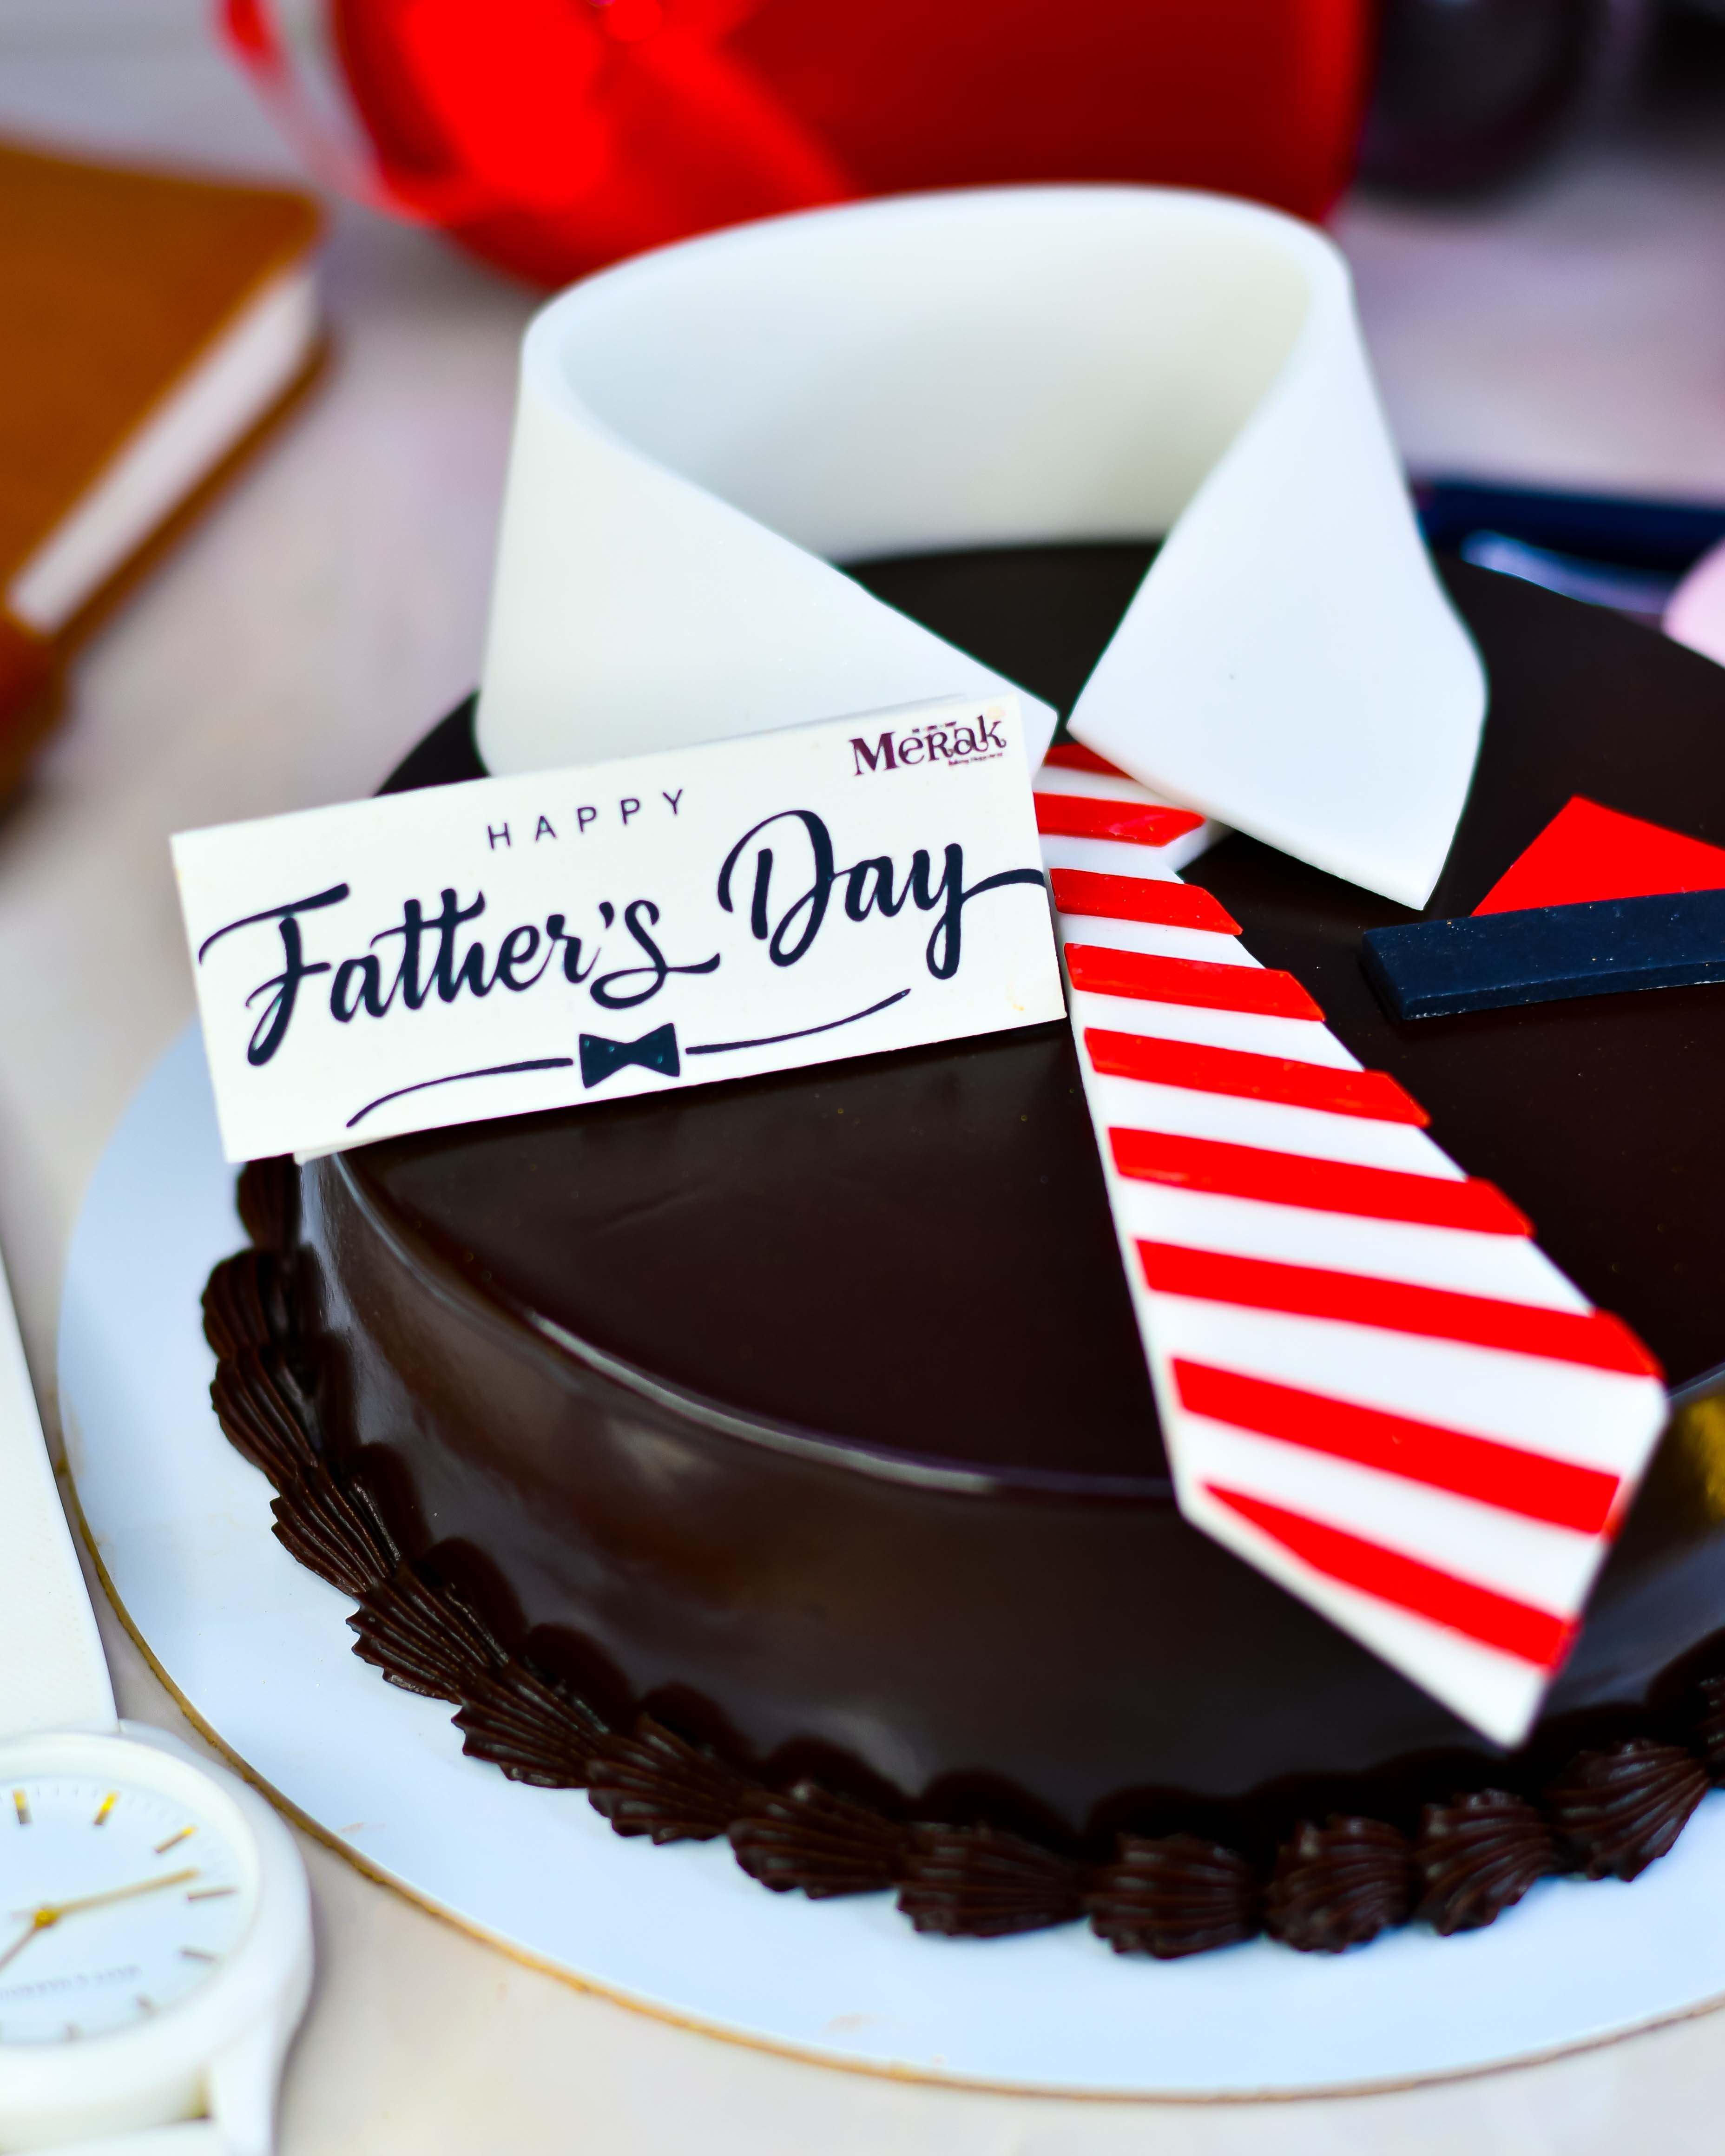 Father's Day celebration cake